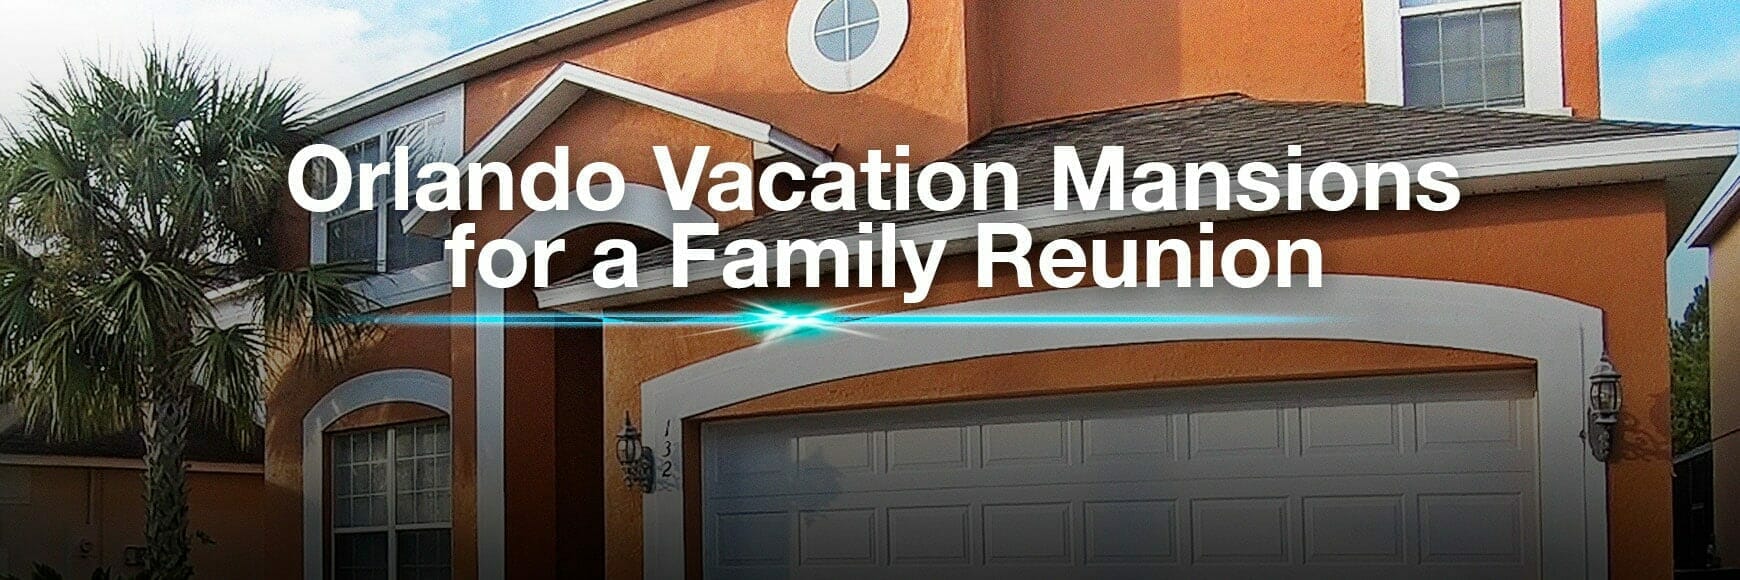 Orlando Vacation Mansions - FamilyReunion